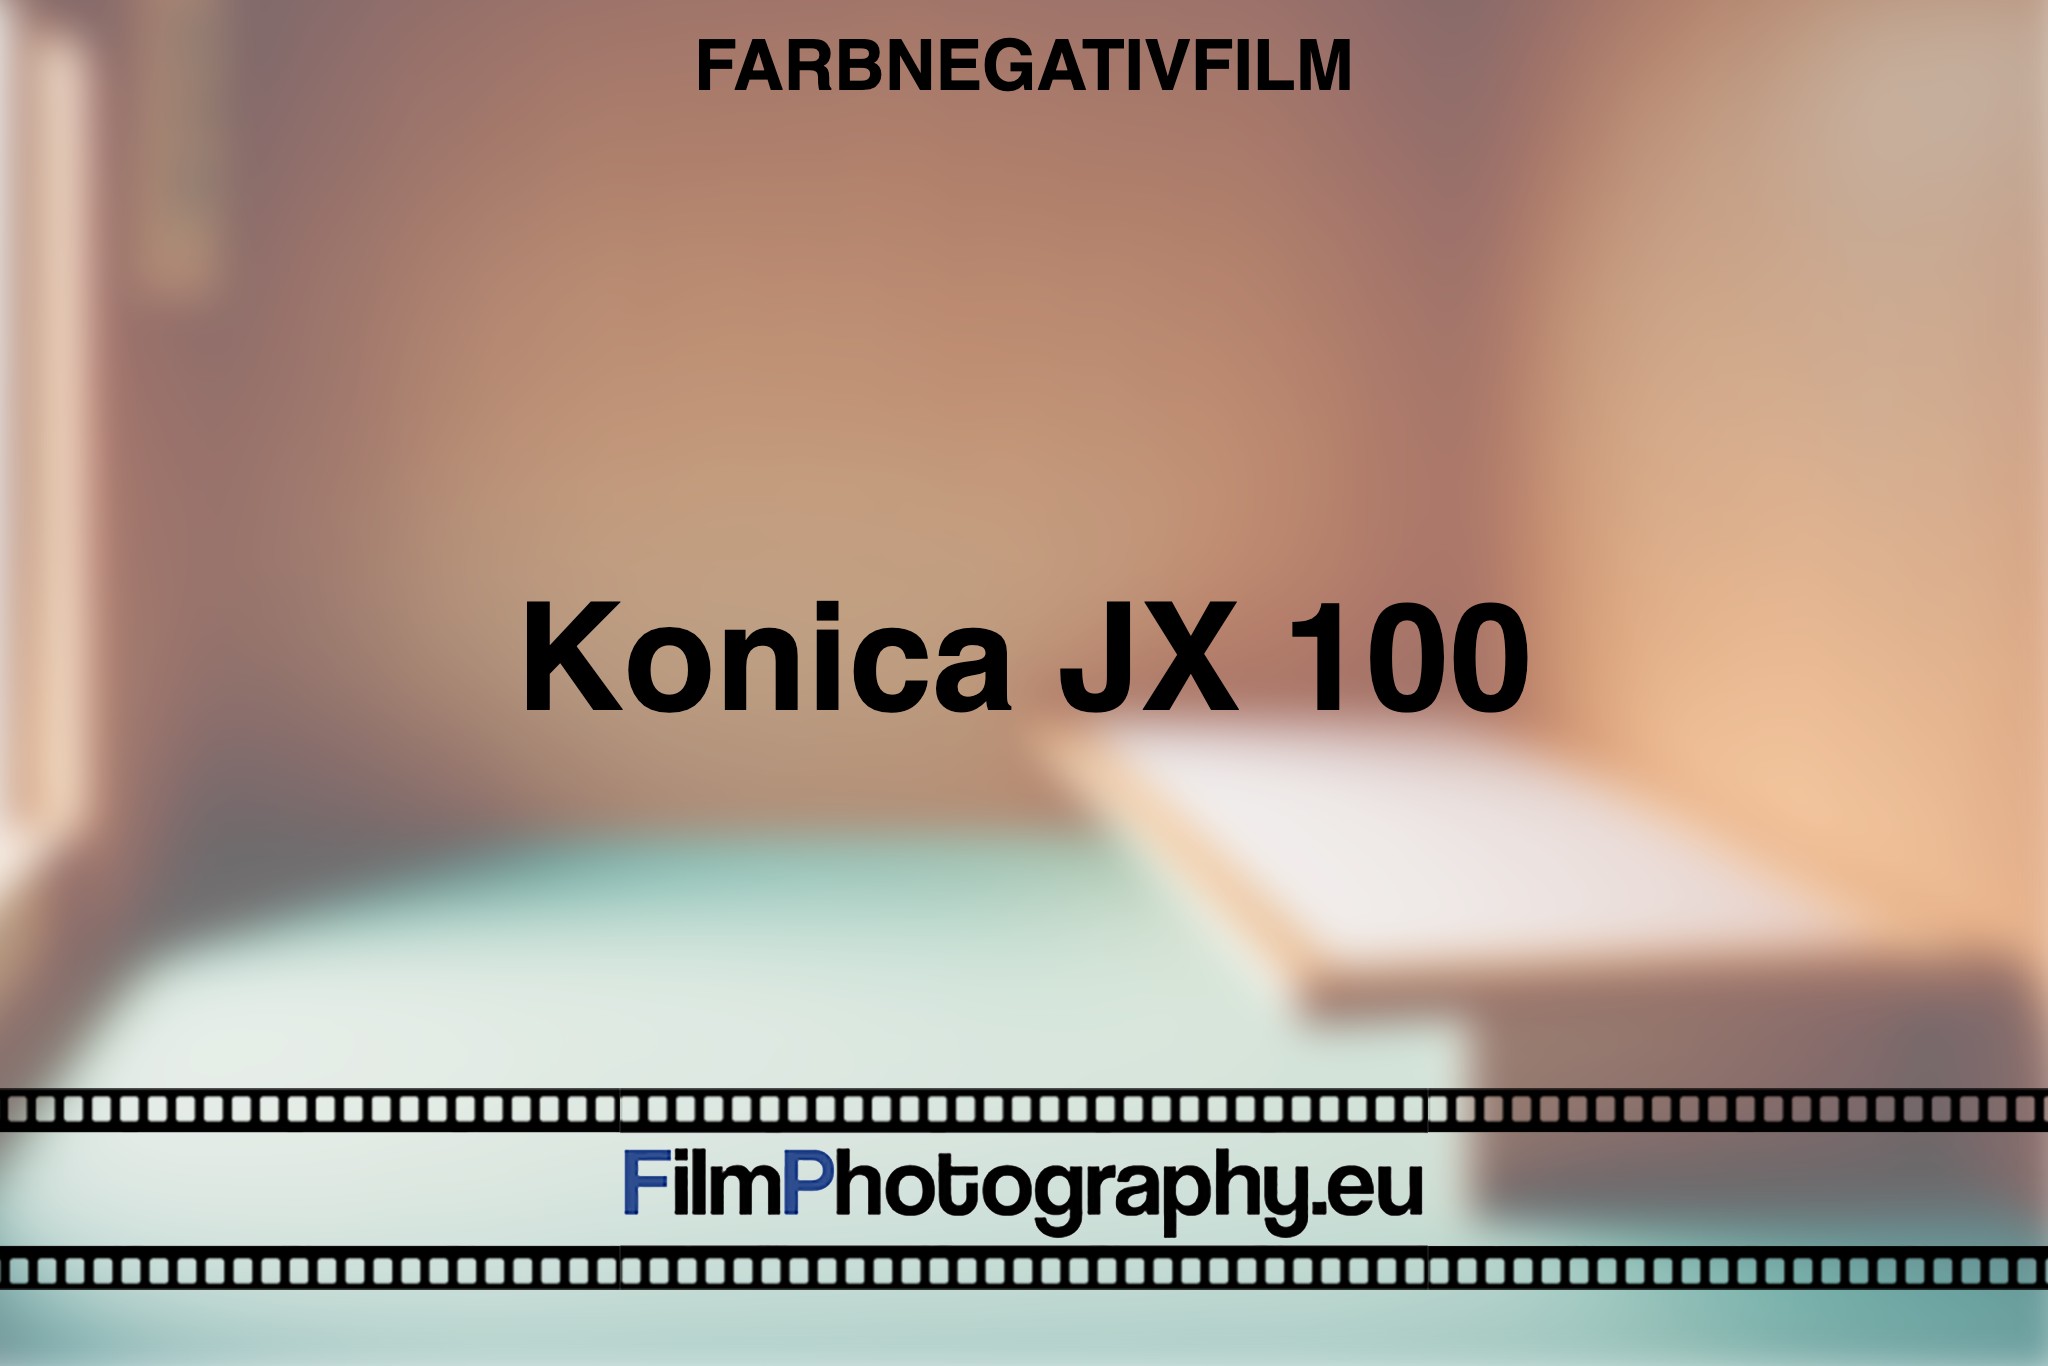 konica-jx-100-farbnegativfilm-bnv